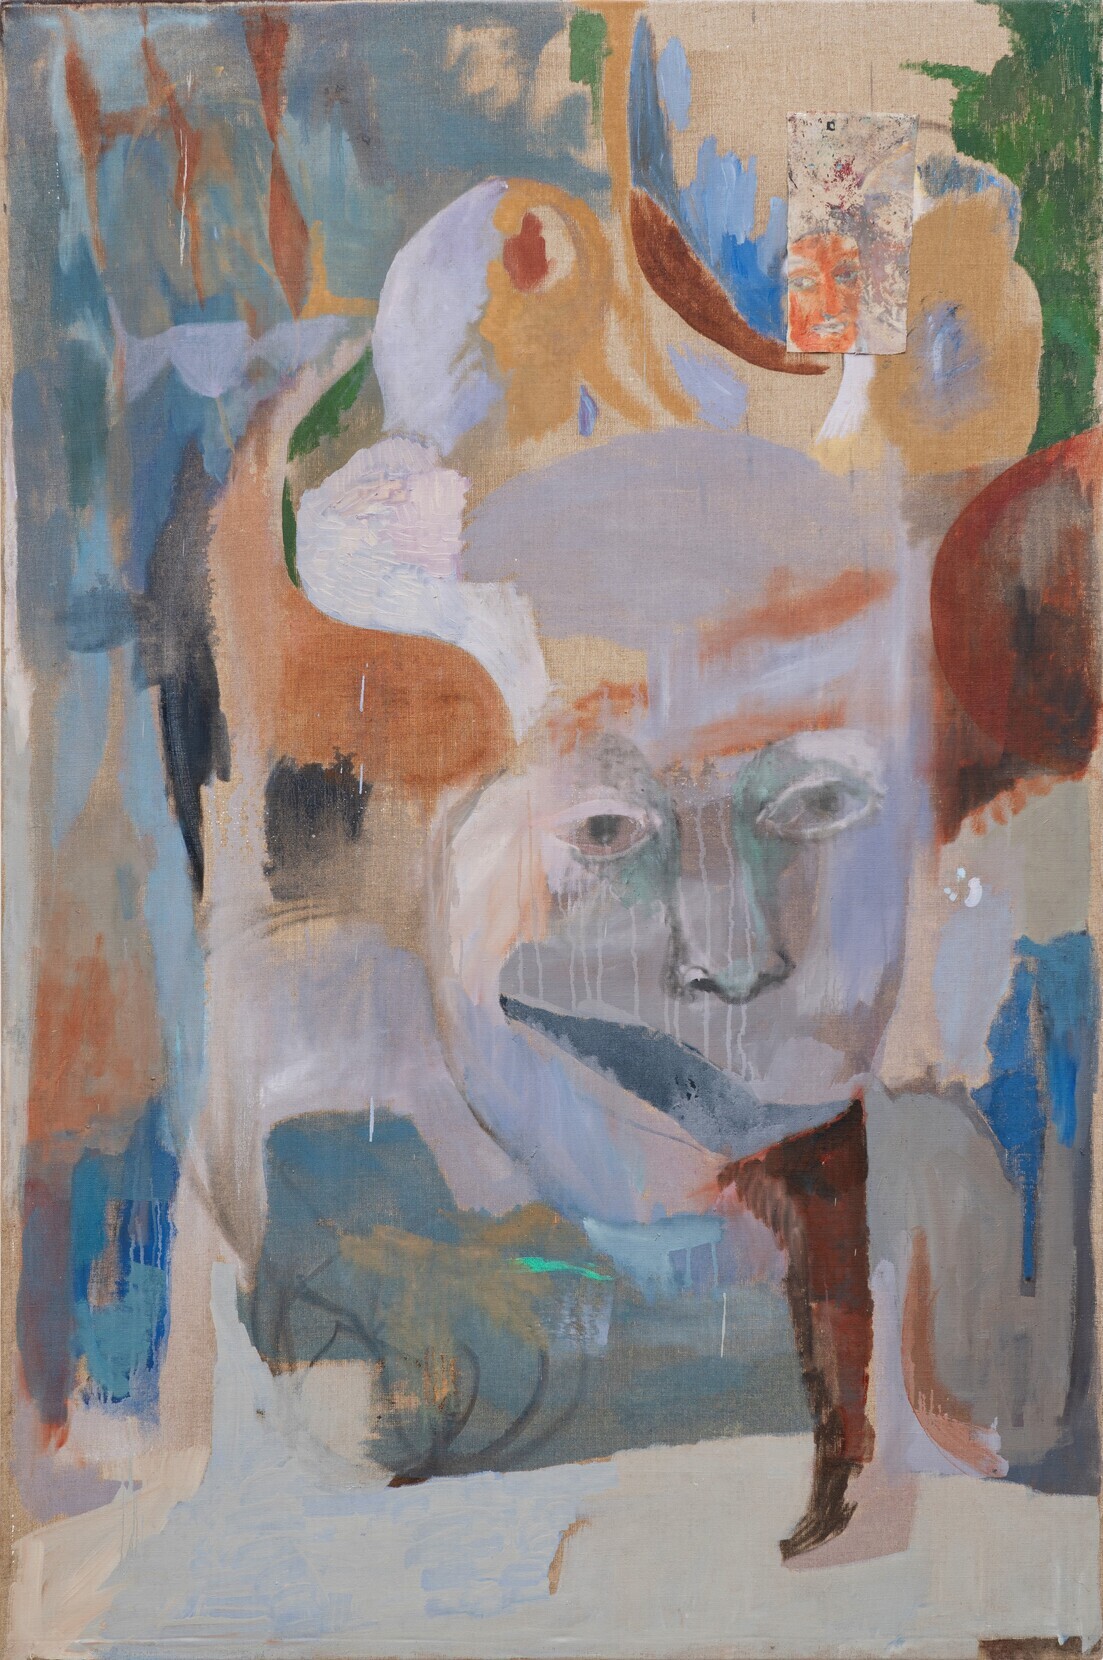 Barbara Wesołowska, Untitled, 2022, oil on linen, 180 x 120 cm